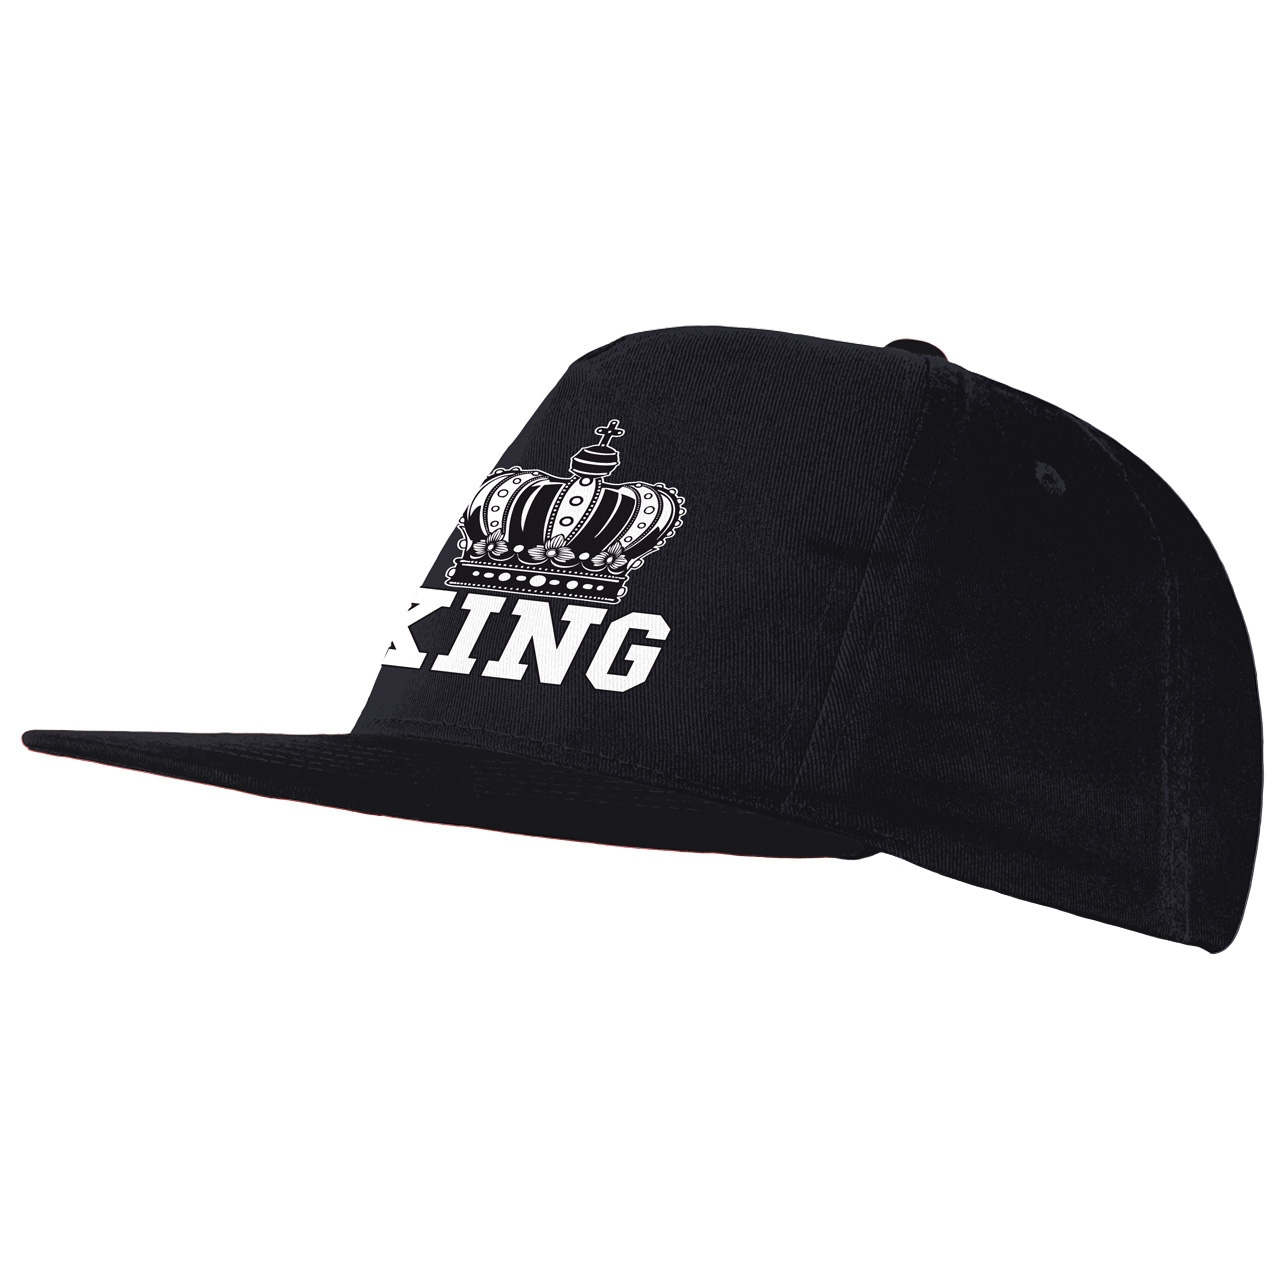 King Cap Flachschirm schwarz